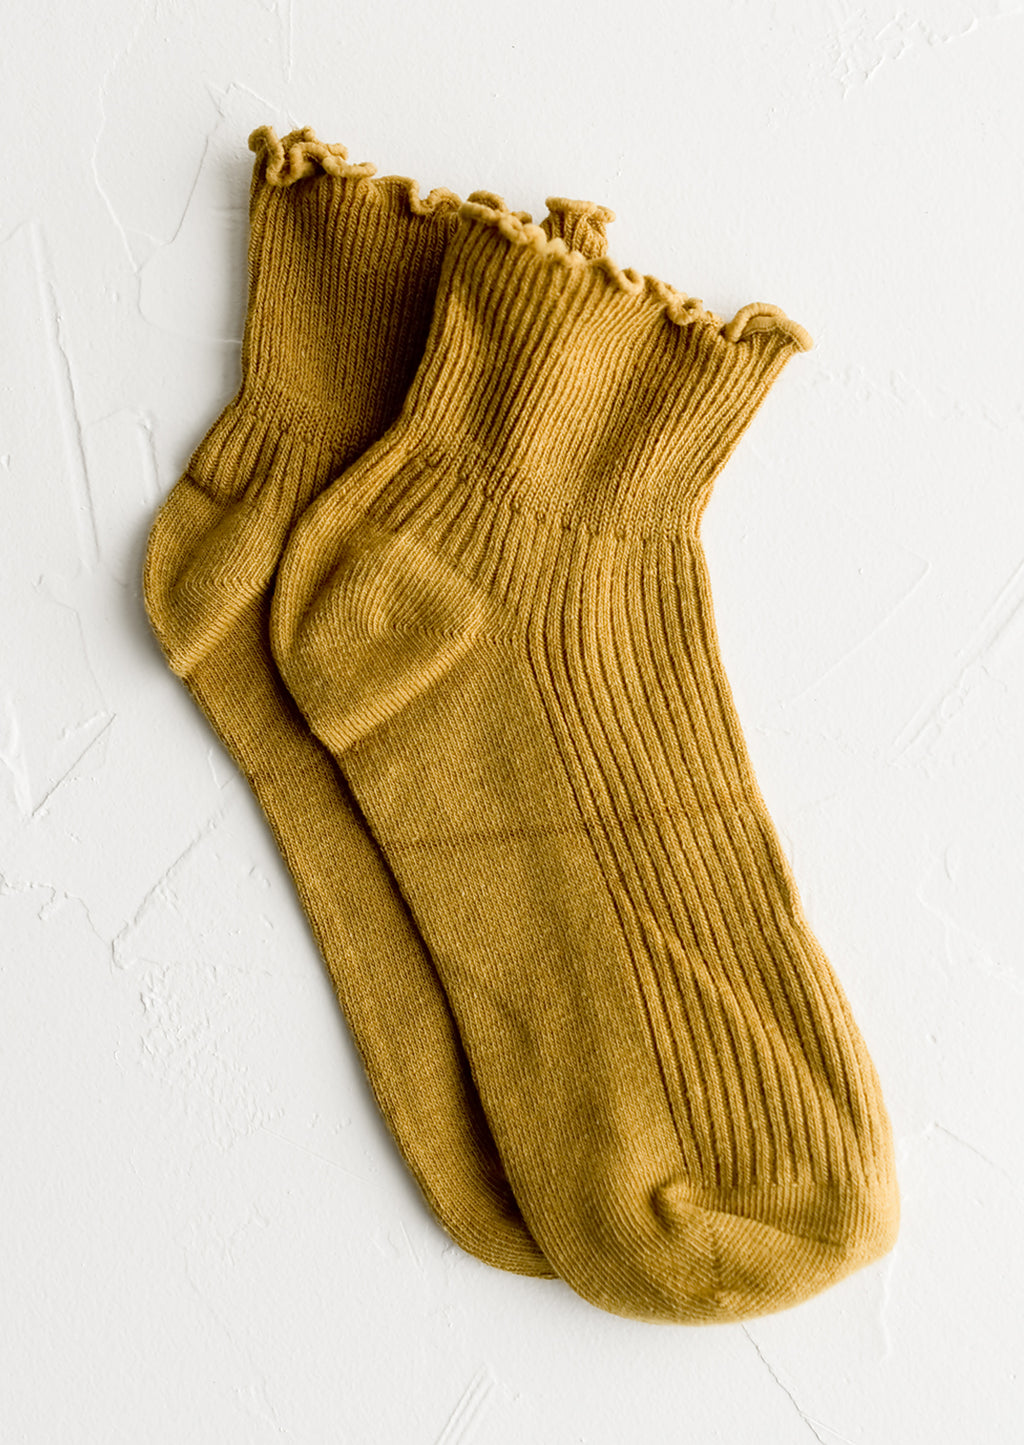 Ochre: A pair of cotton ankle socks in ochre.